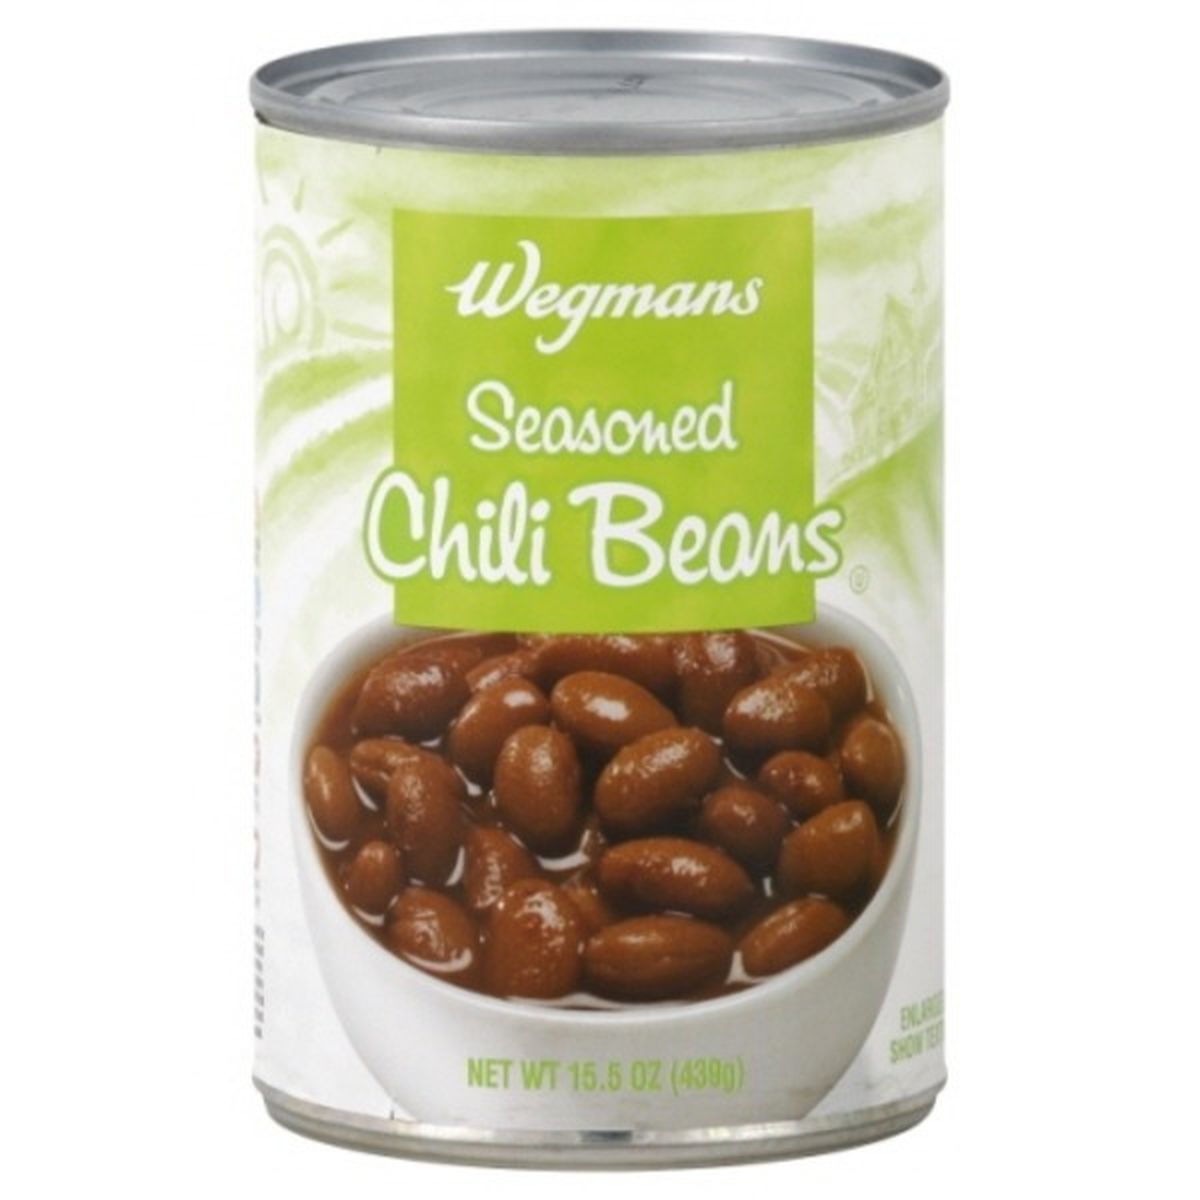 Calories in Wegmans Seasoned Chili Beans